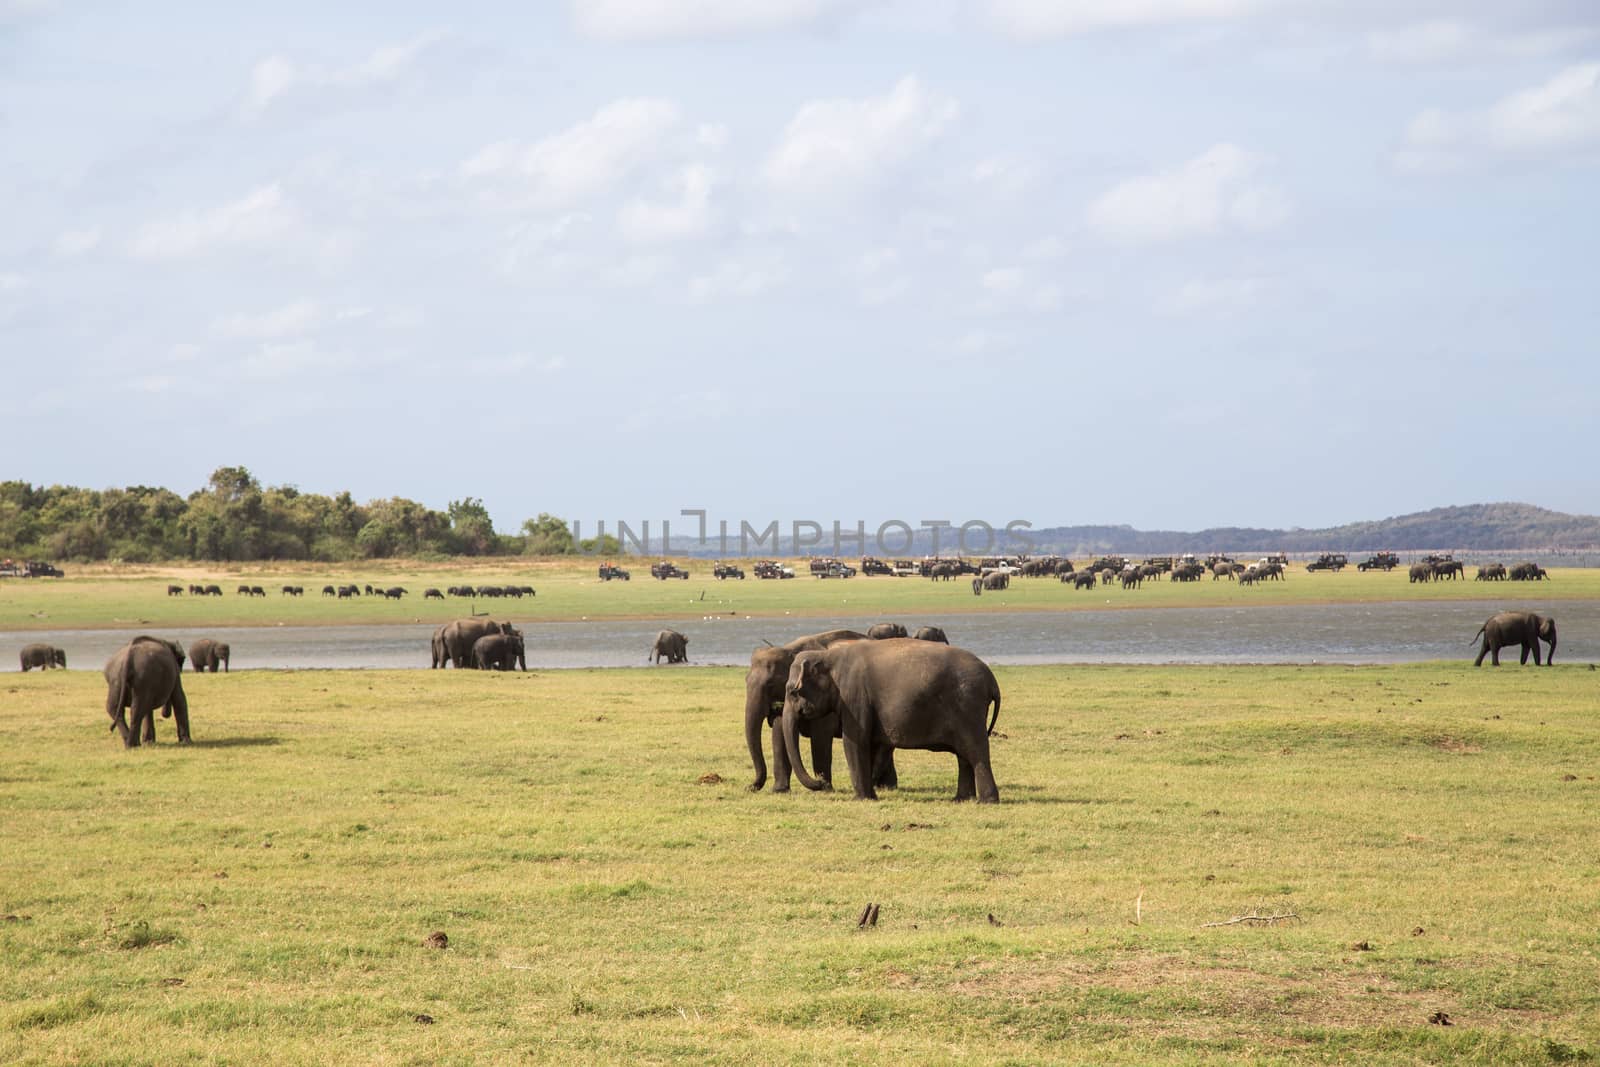 Herd of elephants in Kaudulla National Park, Sri Lanka by oliverfoerstner